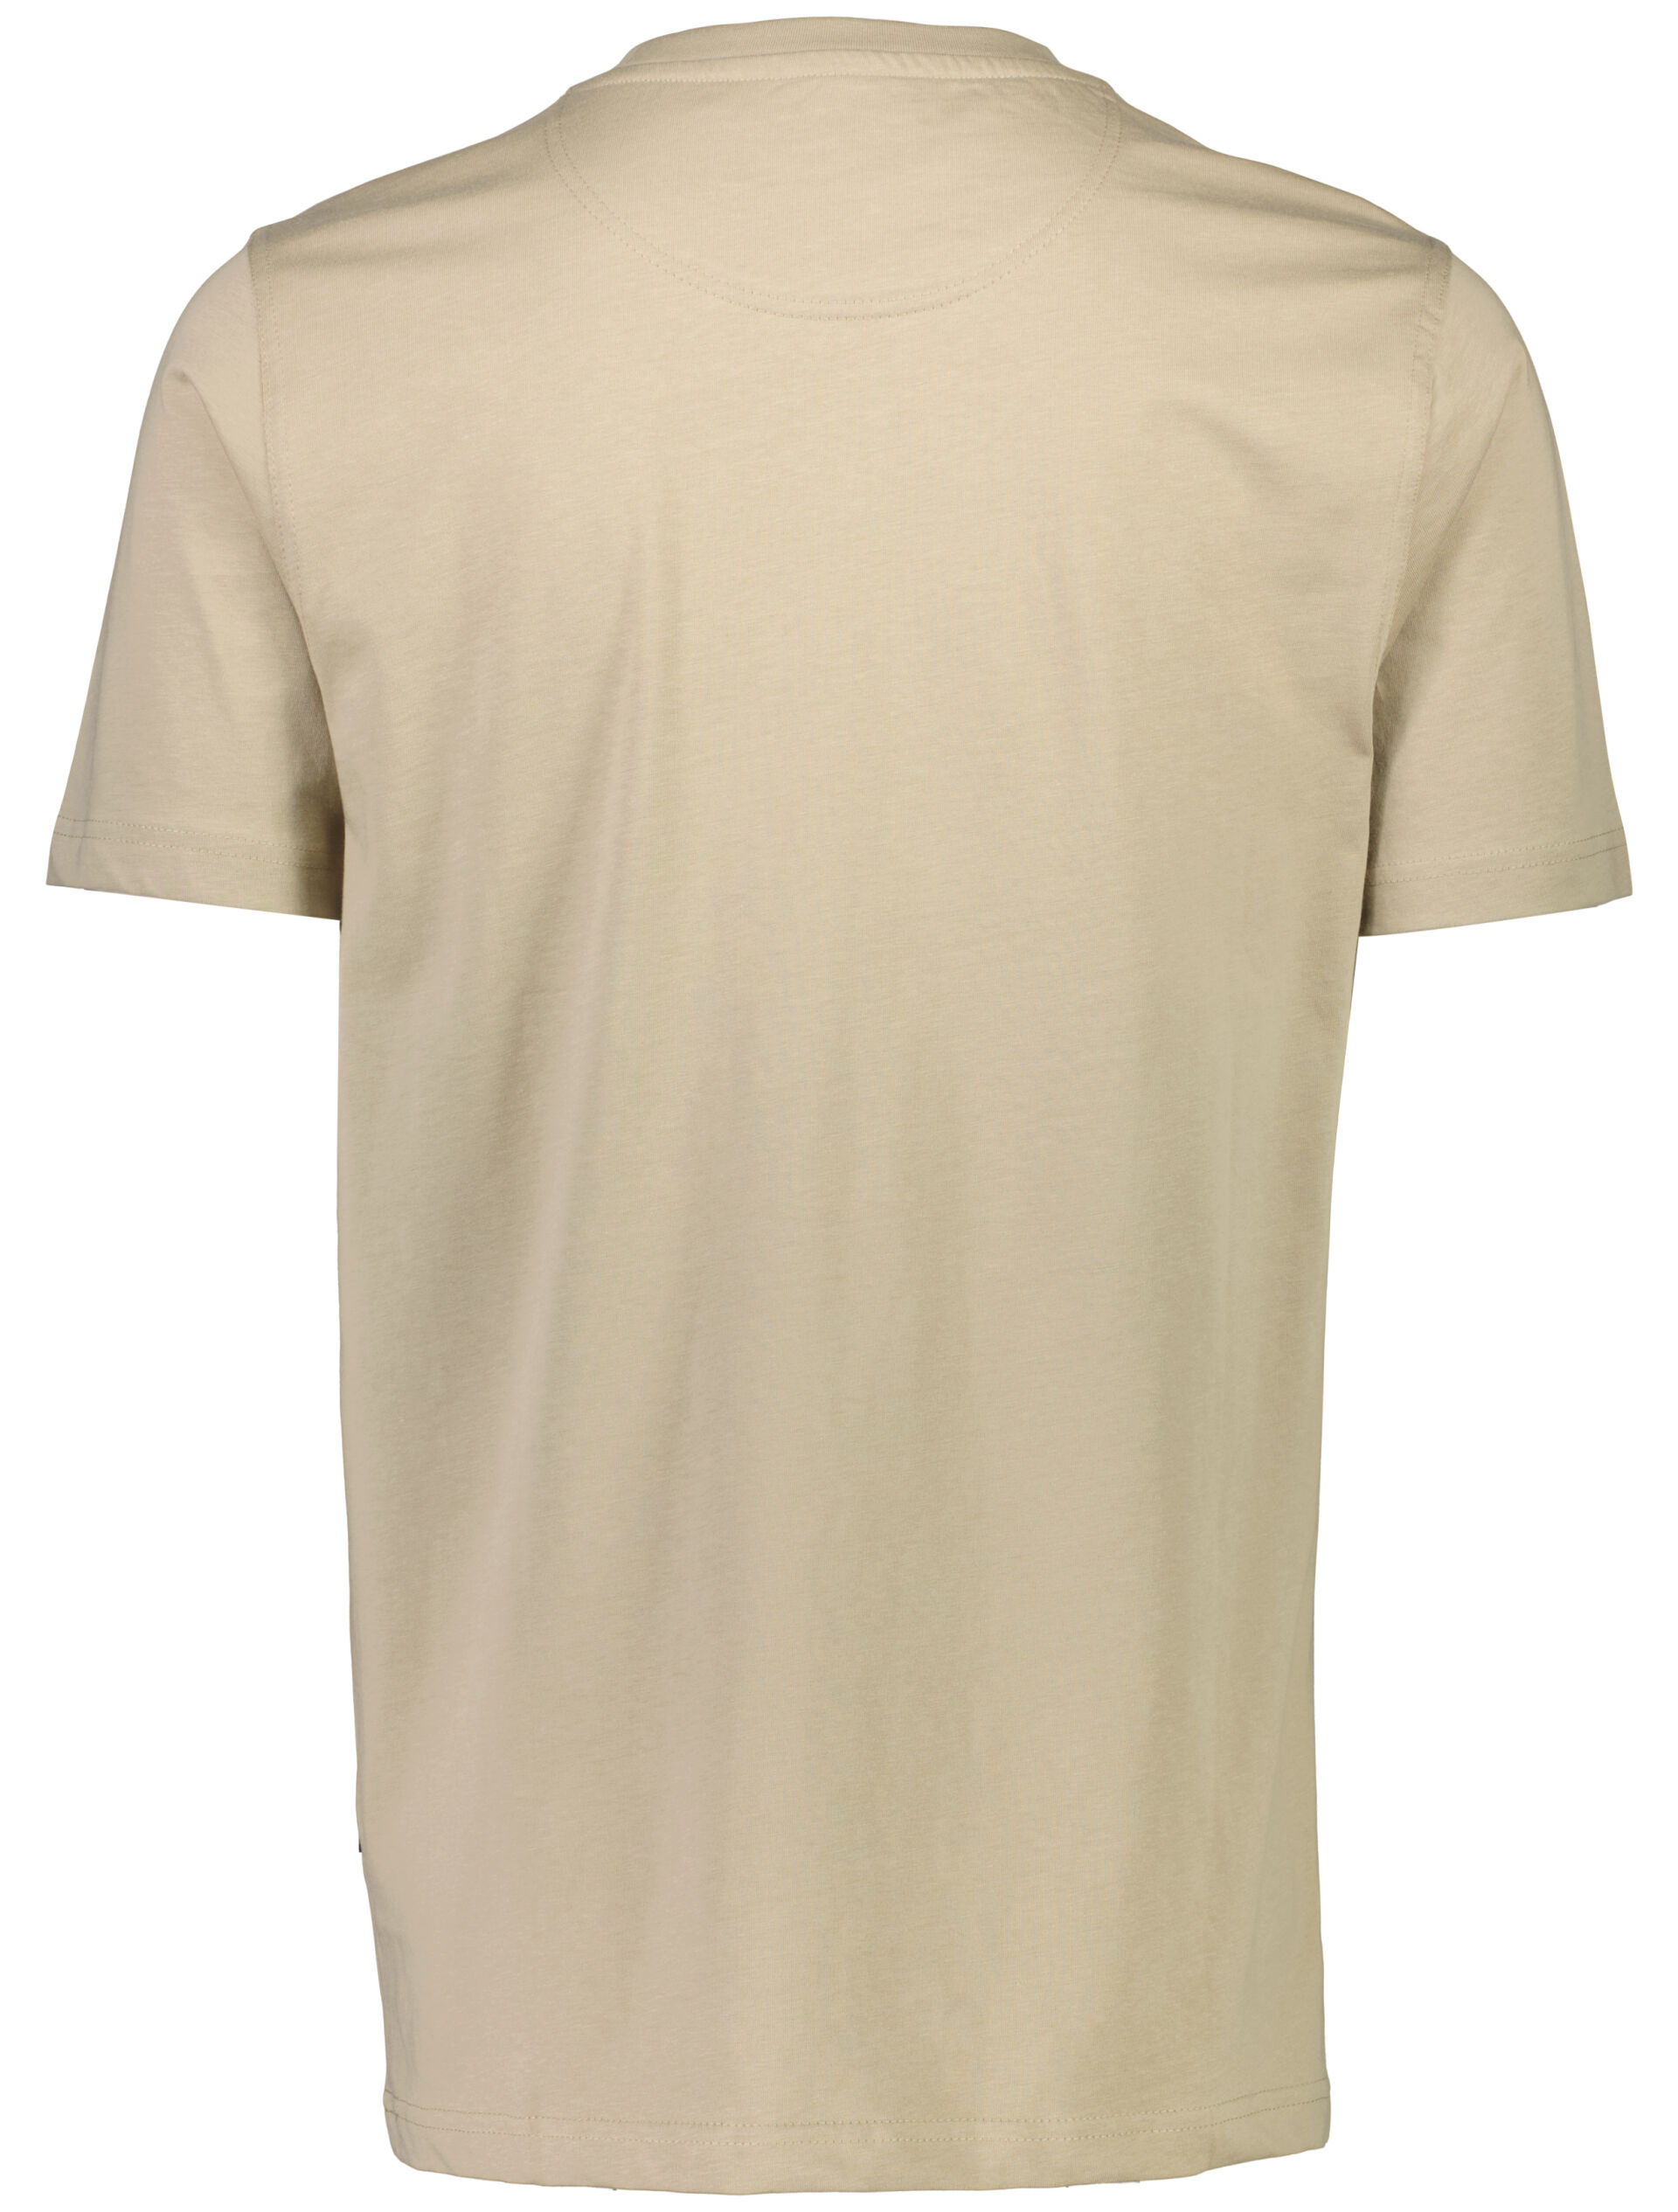 Bison  T-shirt 80-400100PLUS